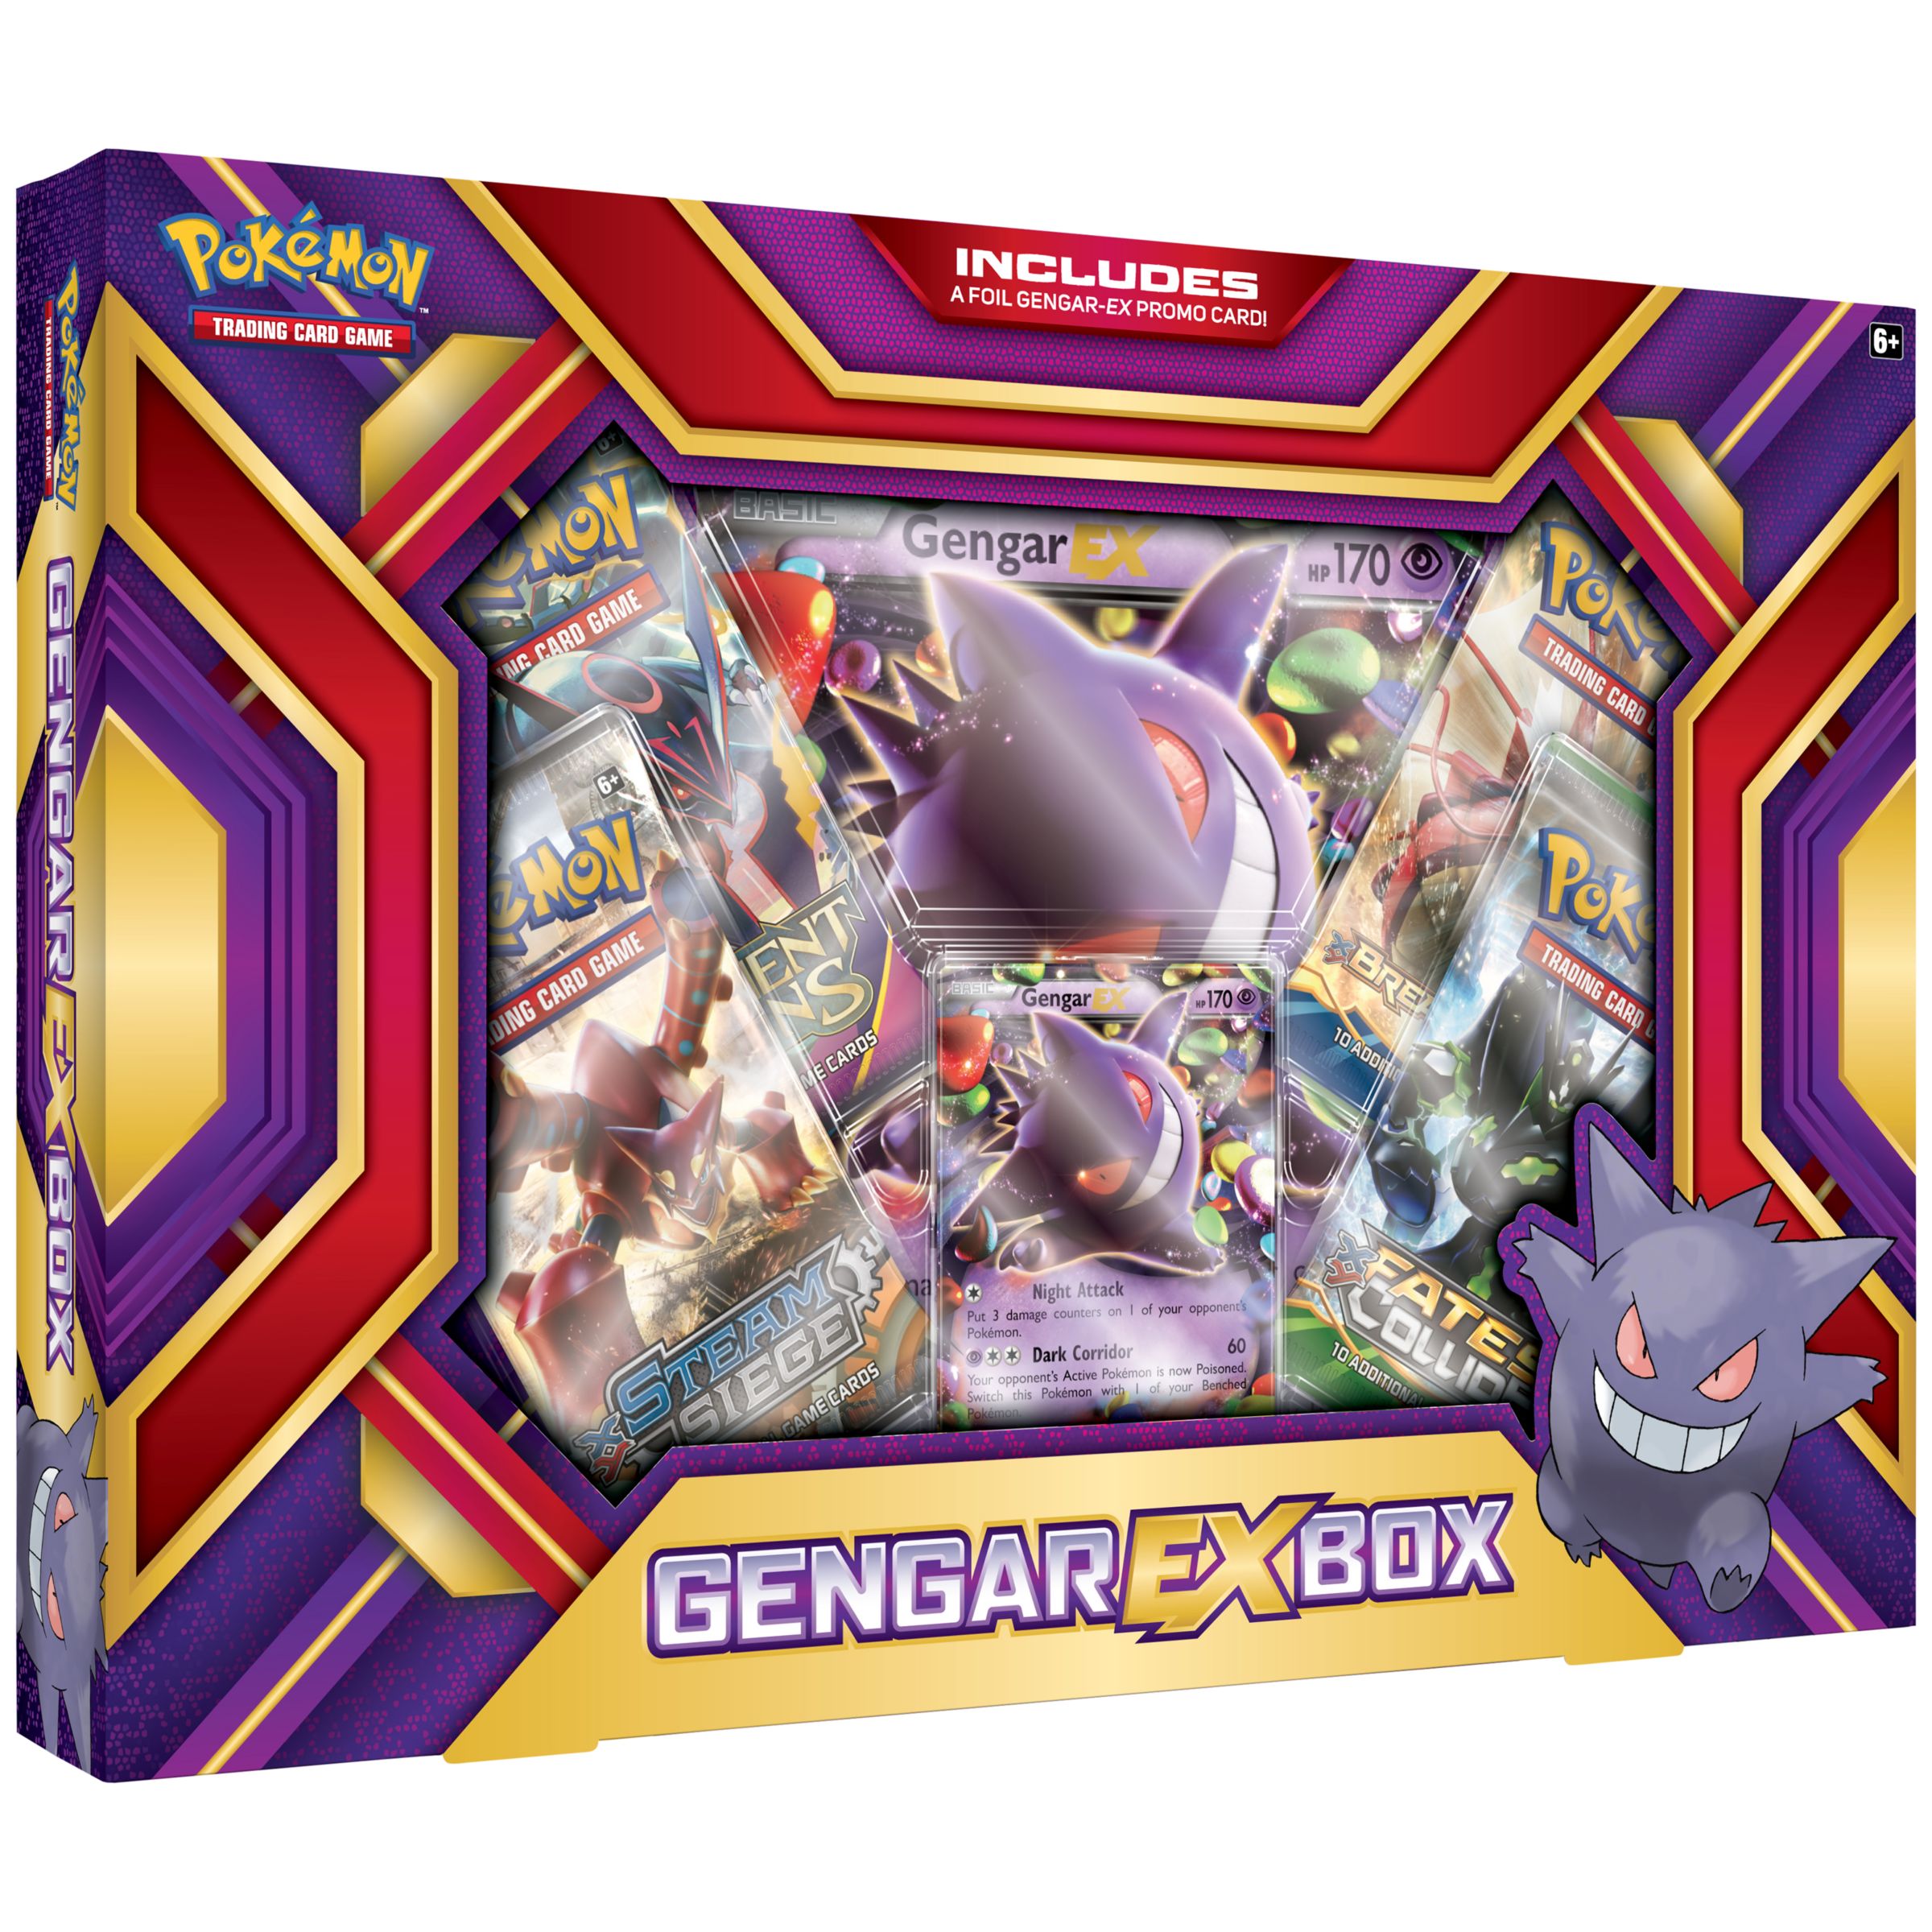 Pokémon Trading Card Game Gengar EX Box